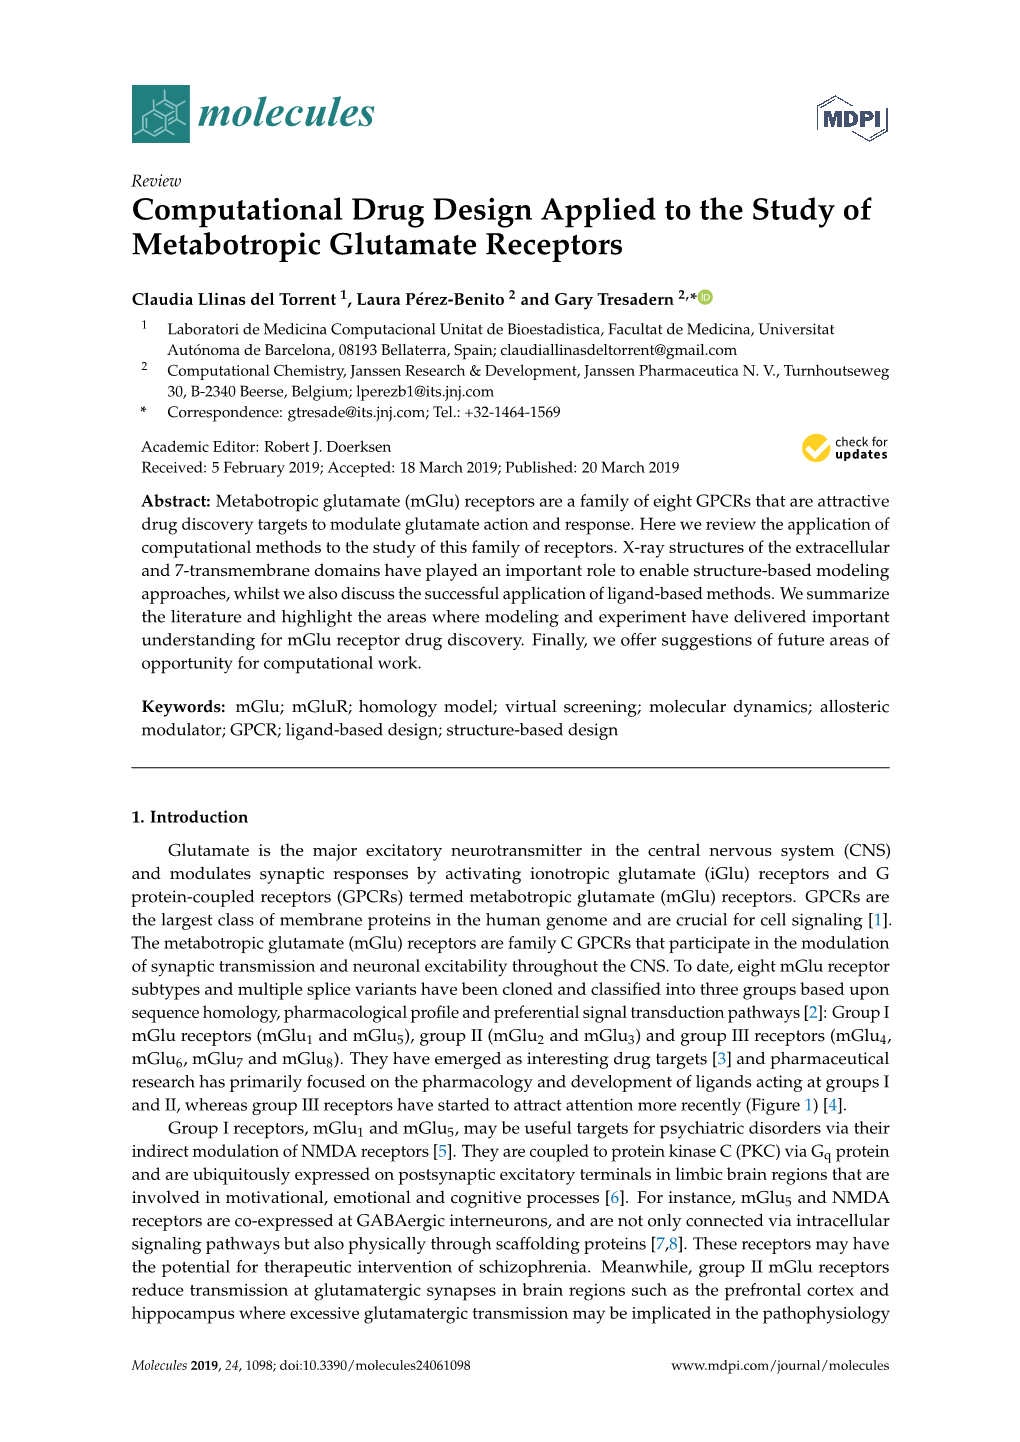 Computational Drug Design Applied to the Study of Metabotropic Glutamate Receptors